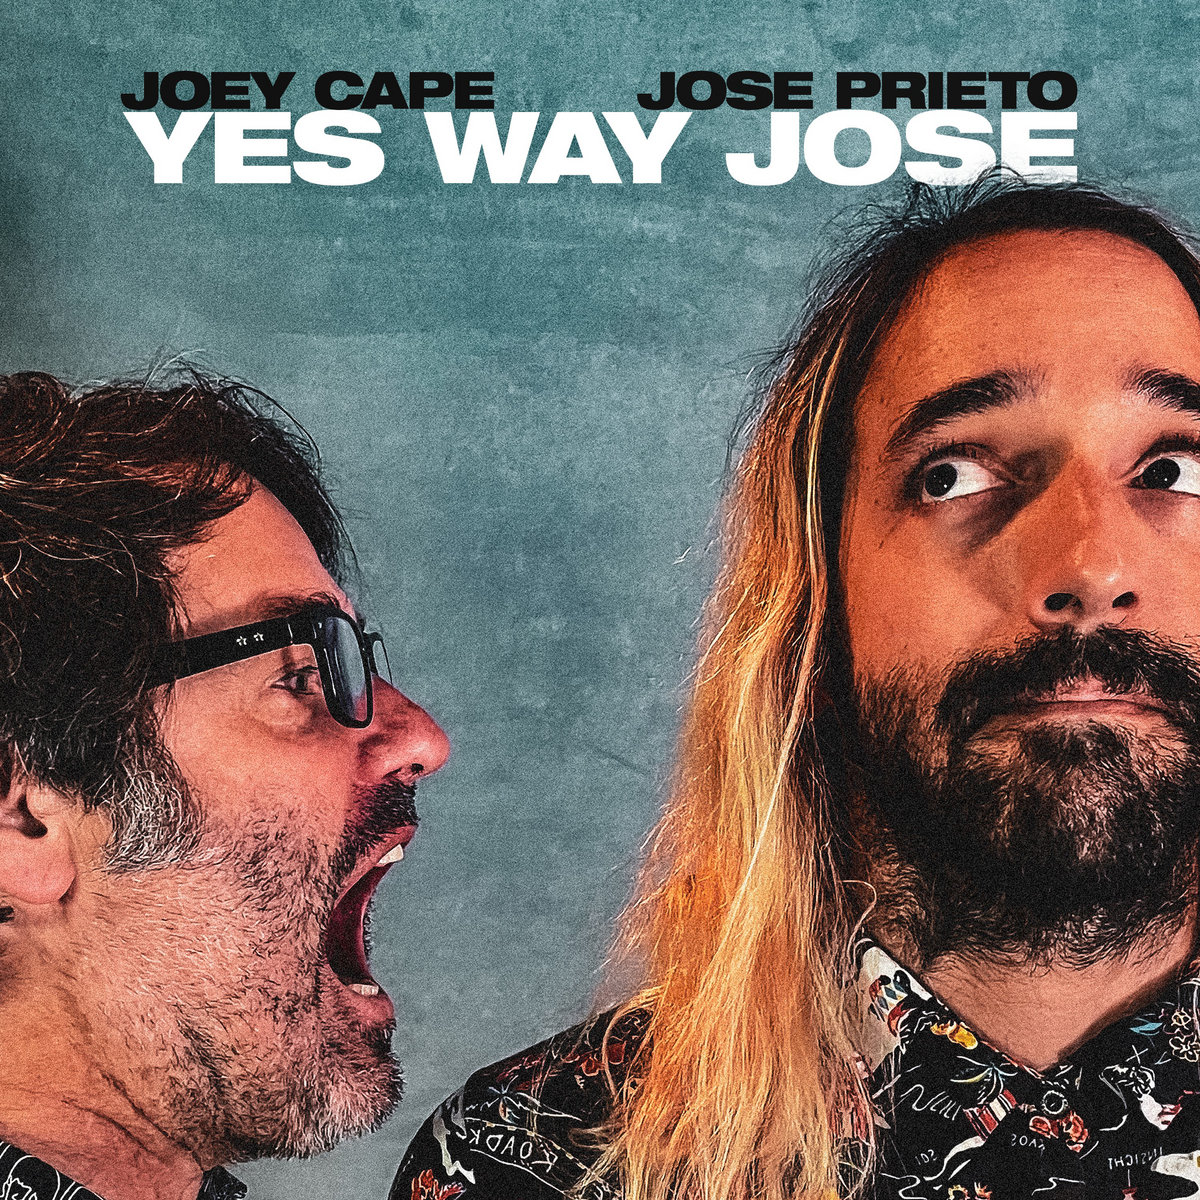 Joey Cape und Jose Prieto - Yes Way Jose